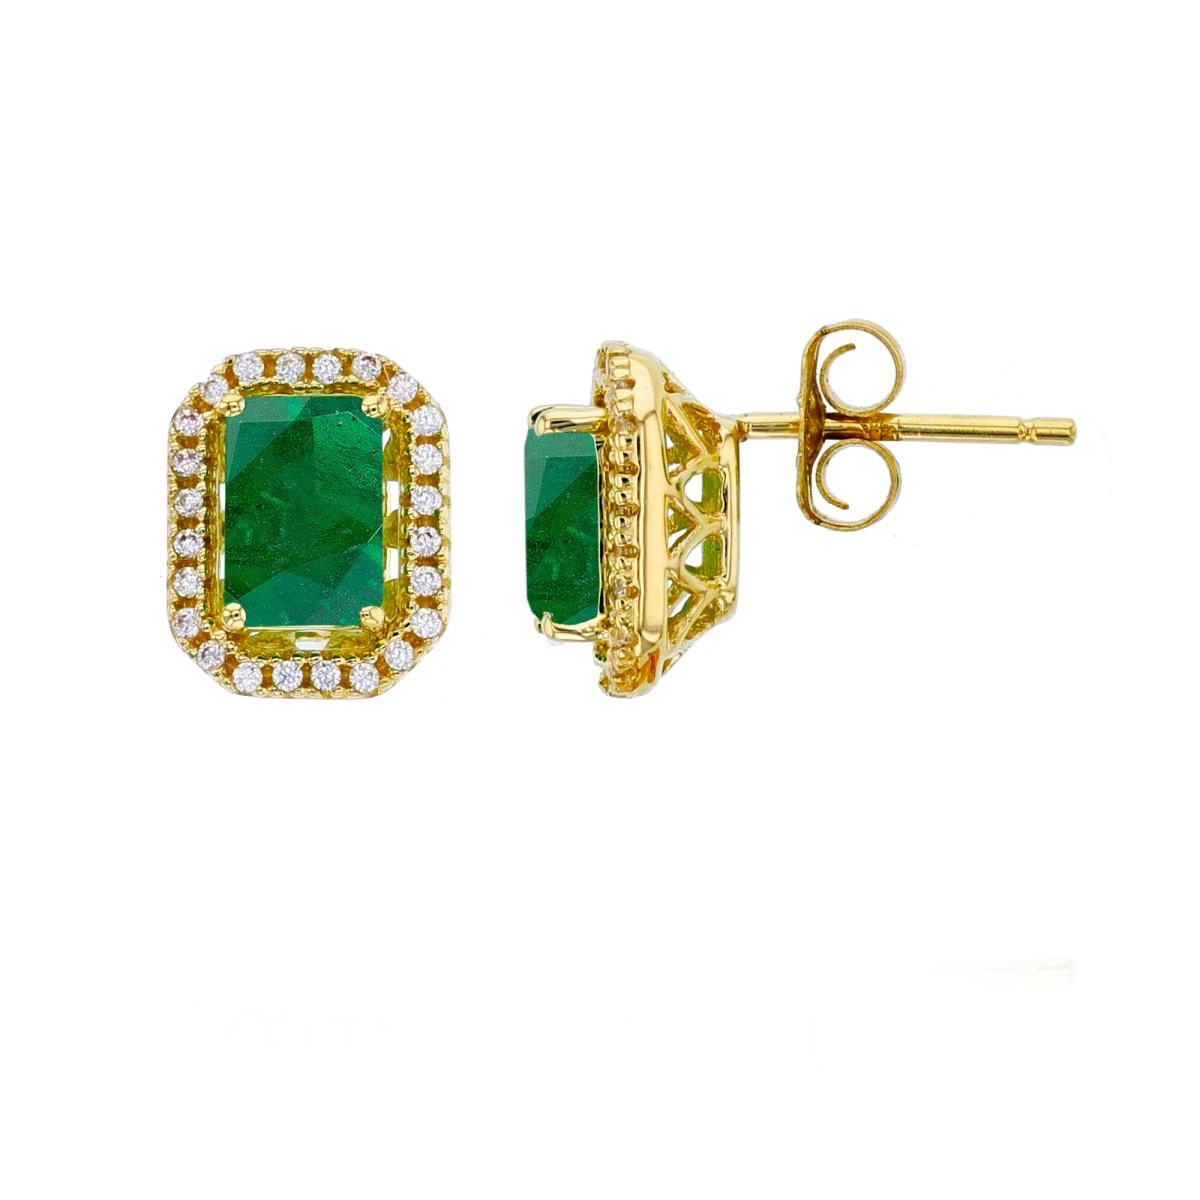 10K Yellow Gold 0.15 CTTW Rnd Diamonds & 6x4mm EC Emerald Cush Halo Stud Earring